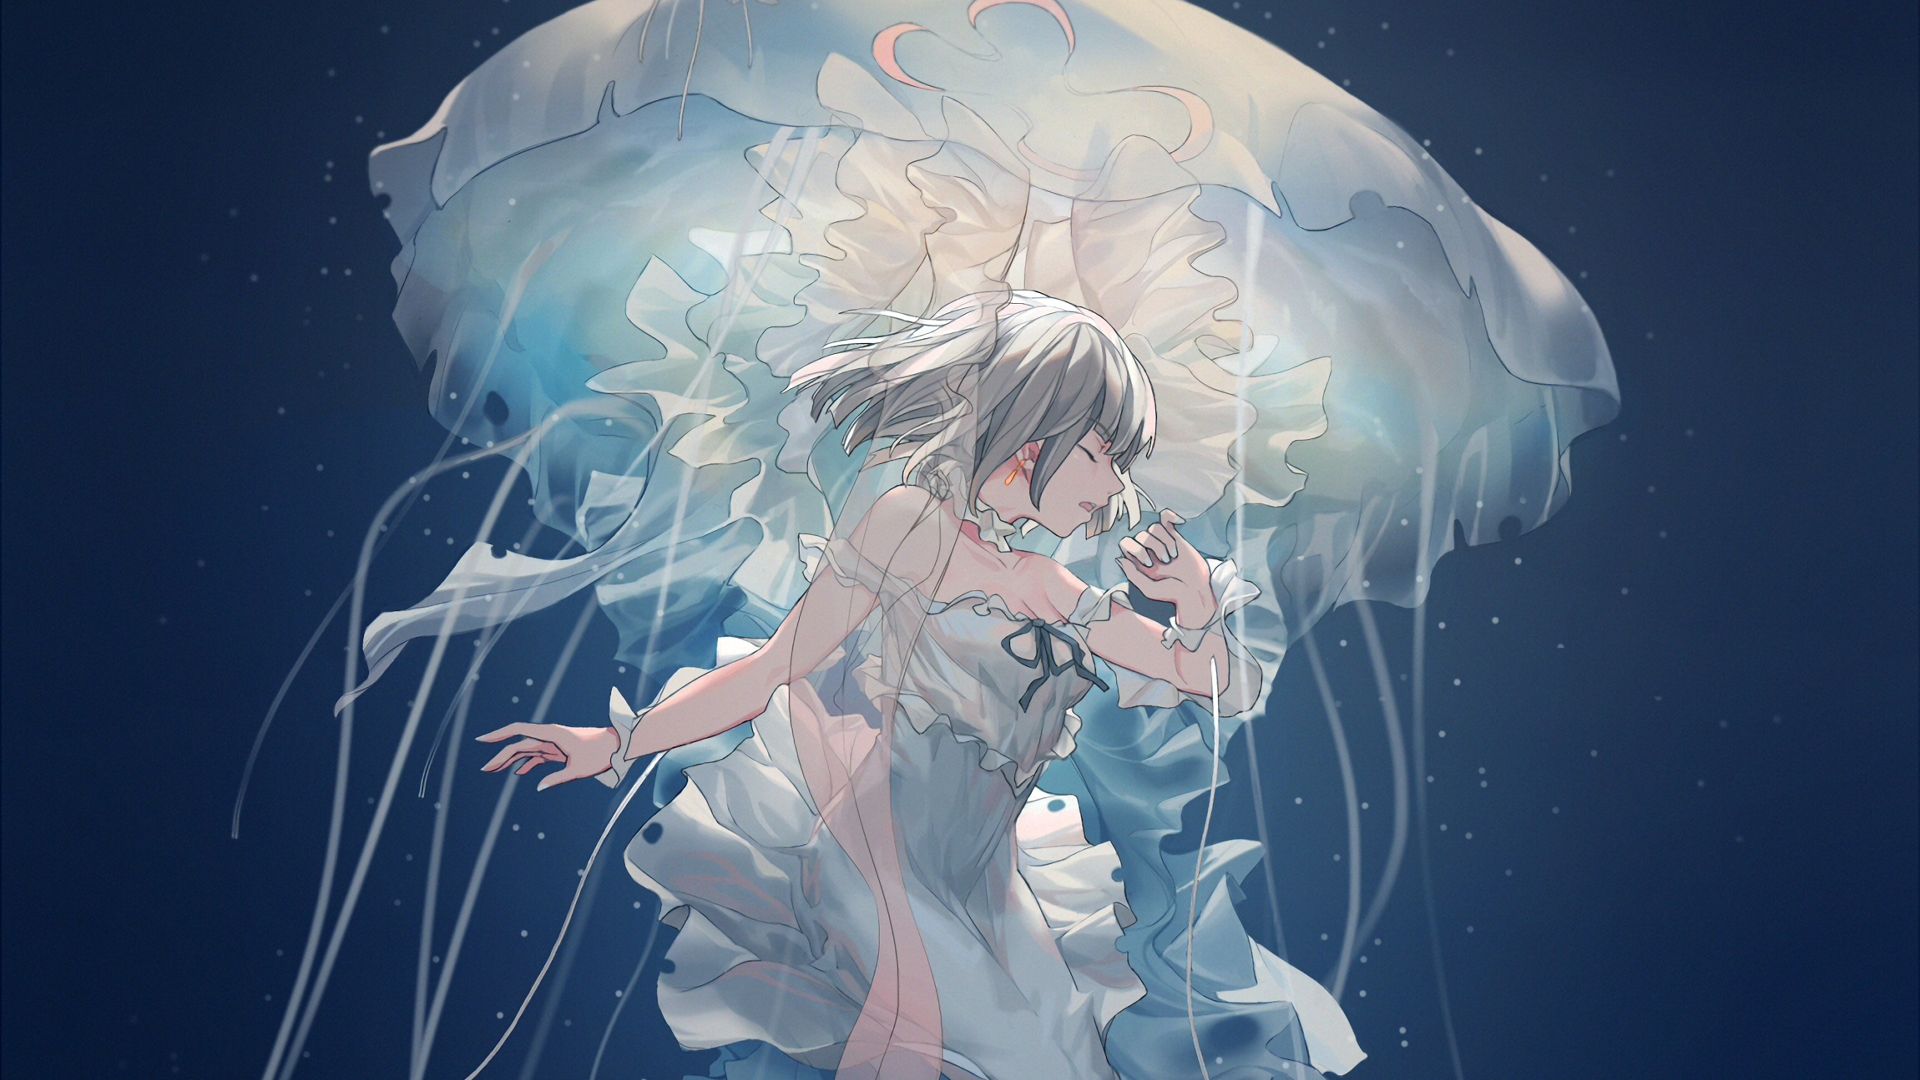 Underwater Condo Anime  Live Wallpaper 1920 x 1080  rwallpaper